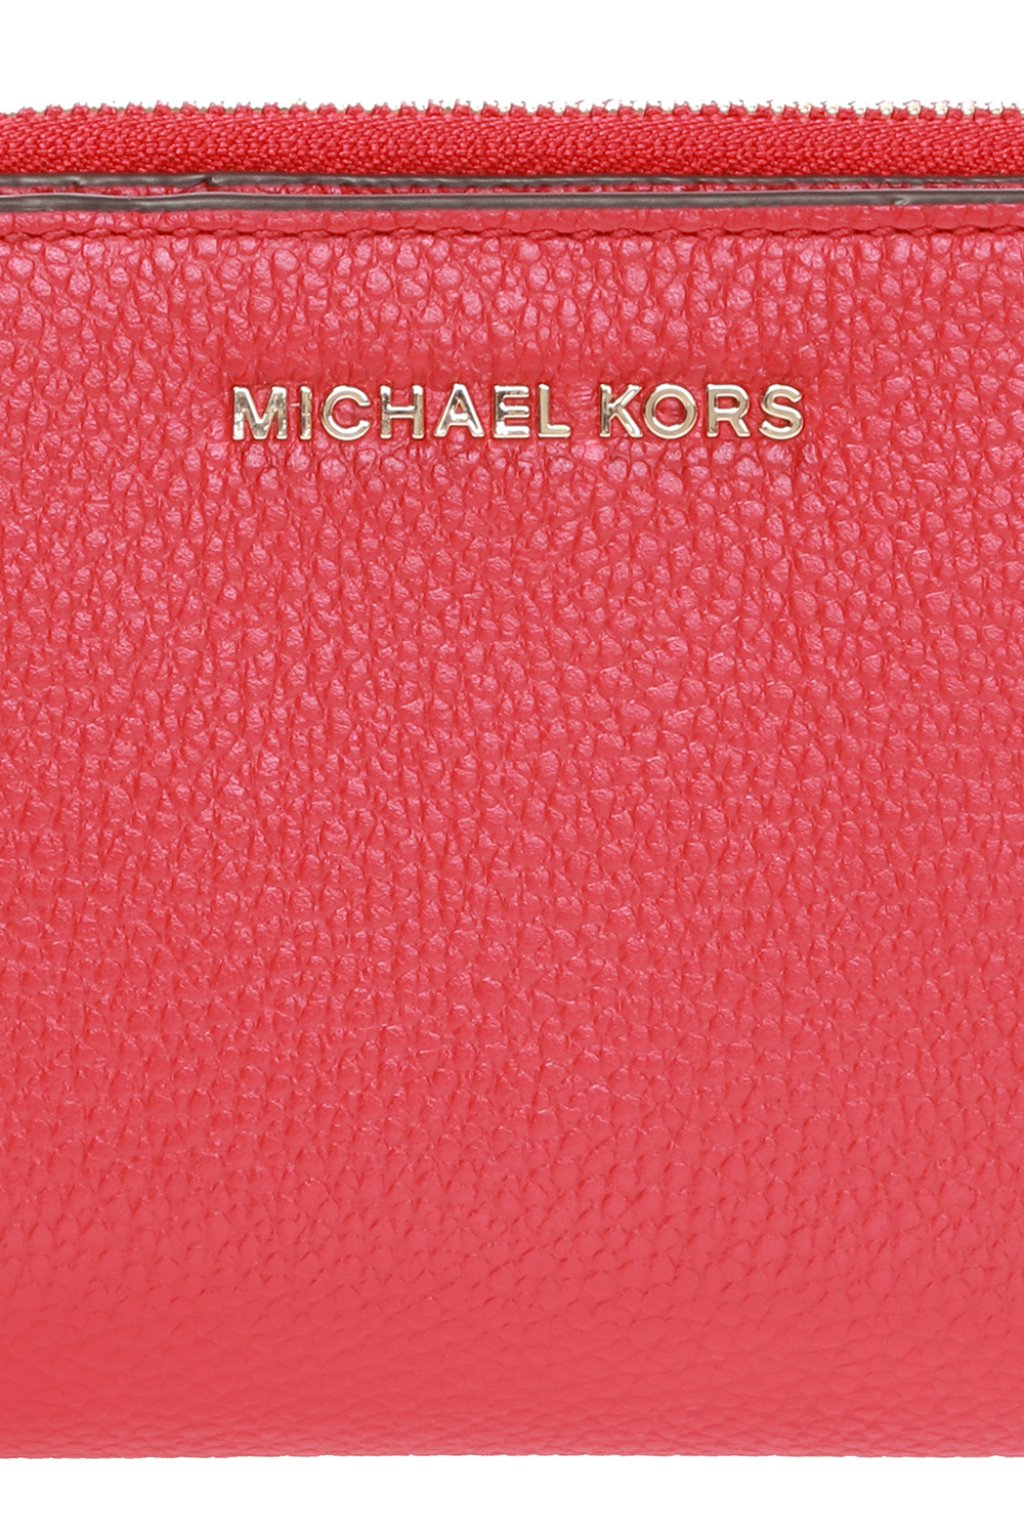 michael kors wallet red